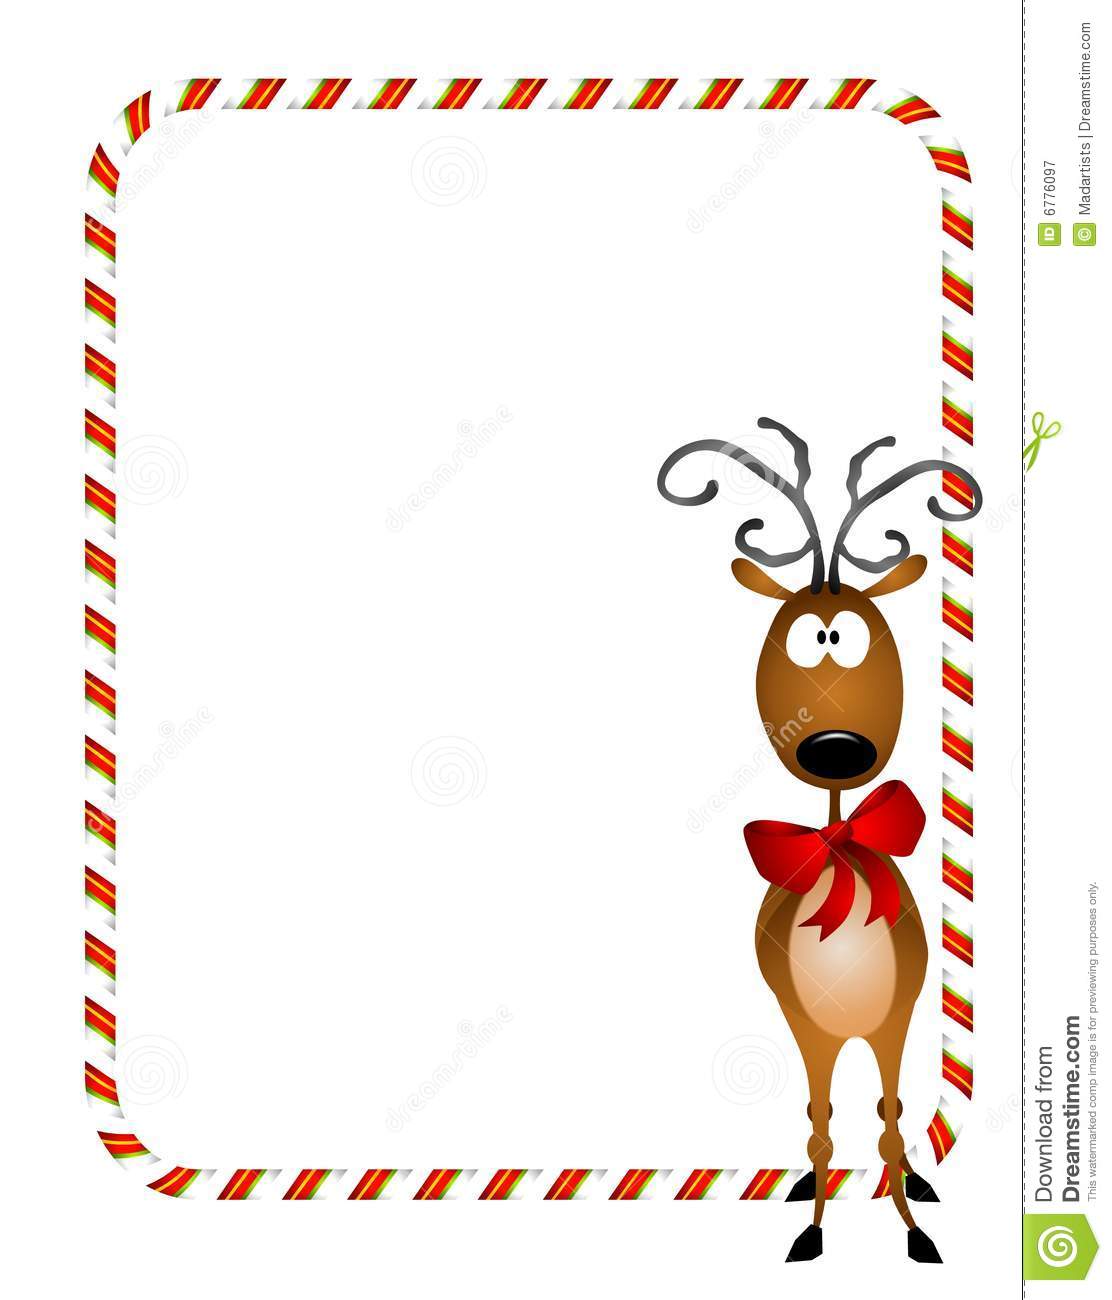 Reindeer Xmas Border Royalty Free Stock Photography   Image  6776097